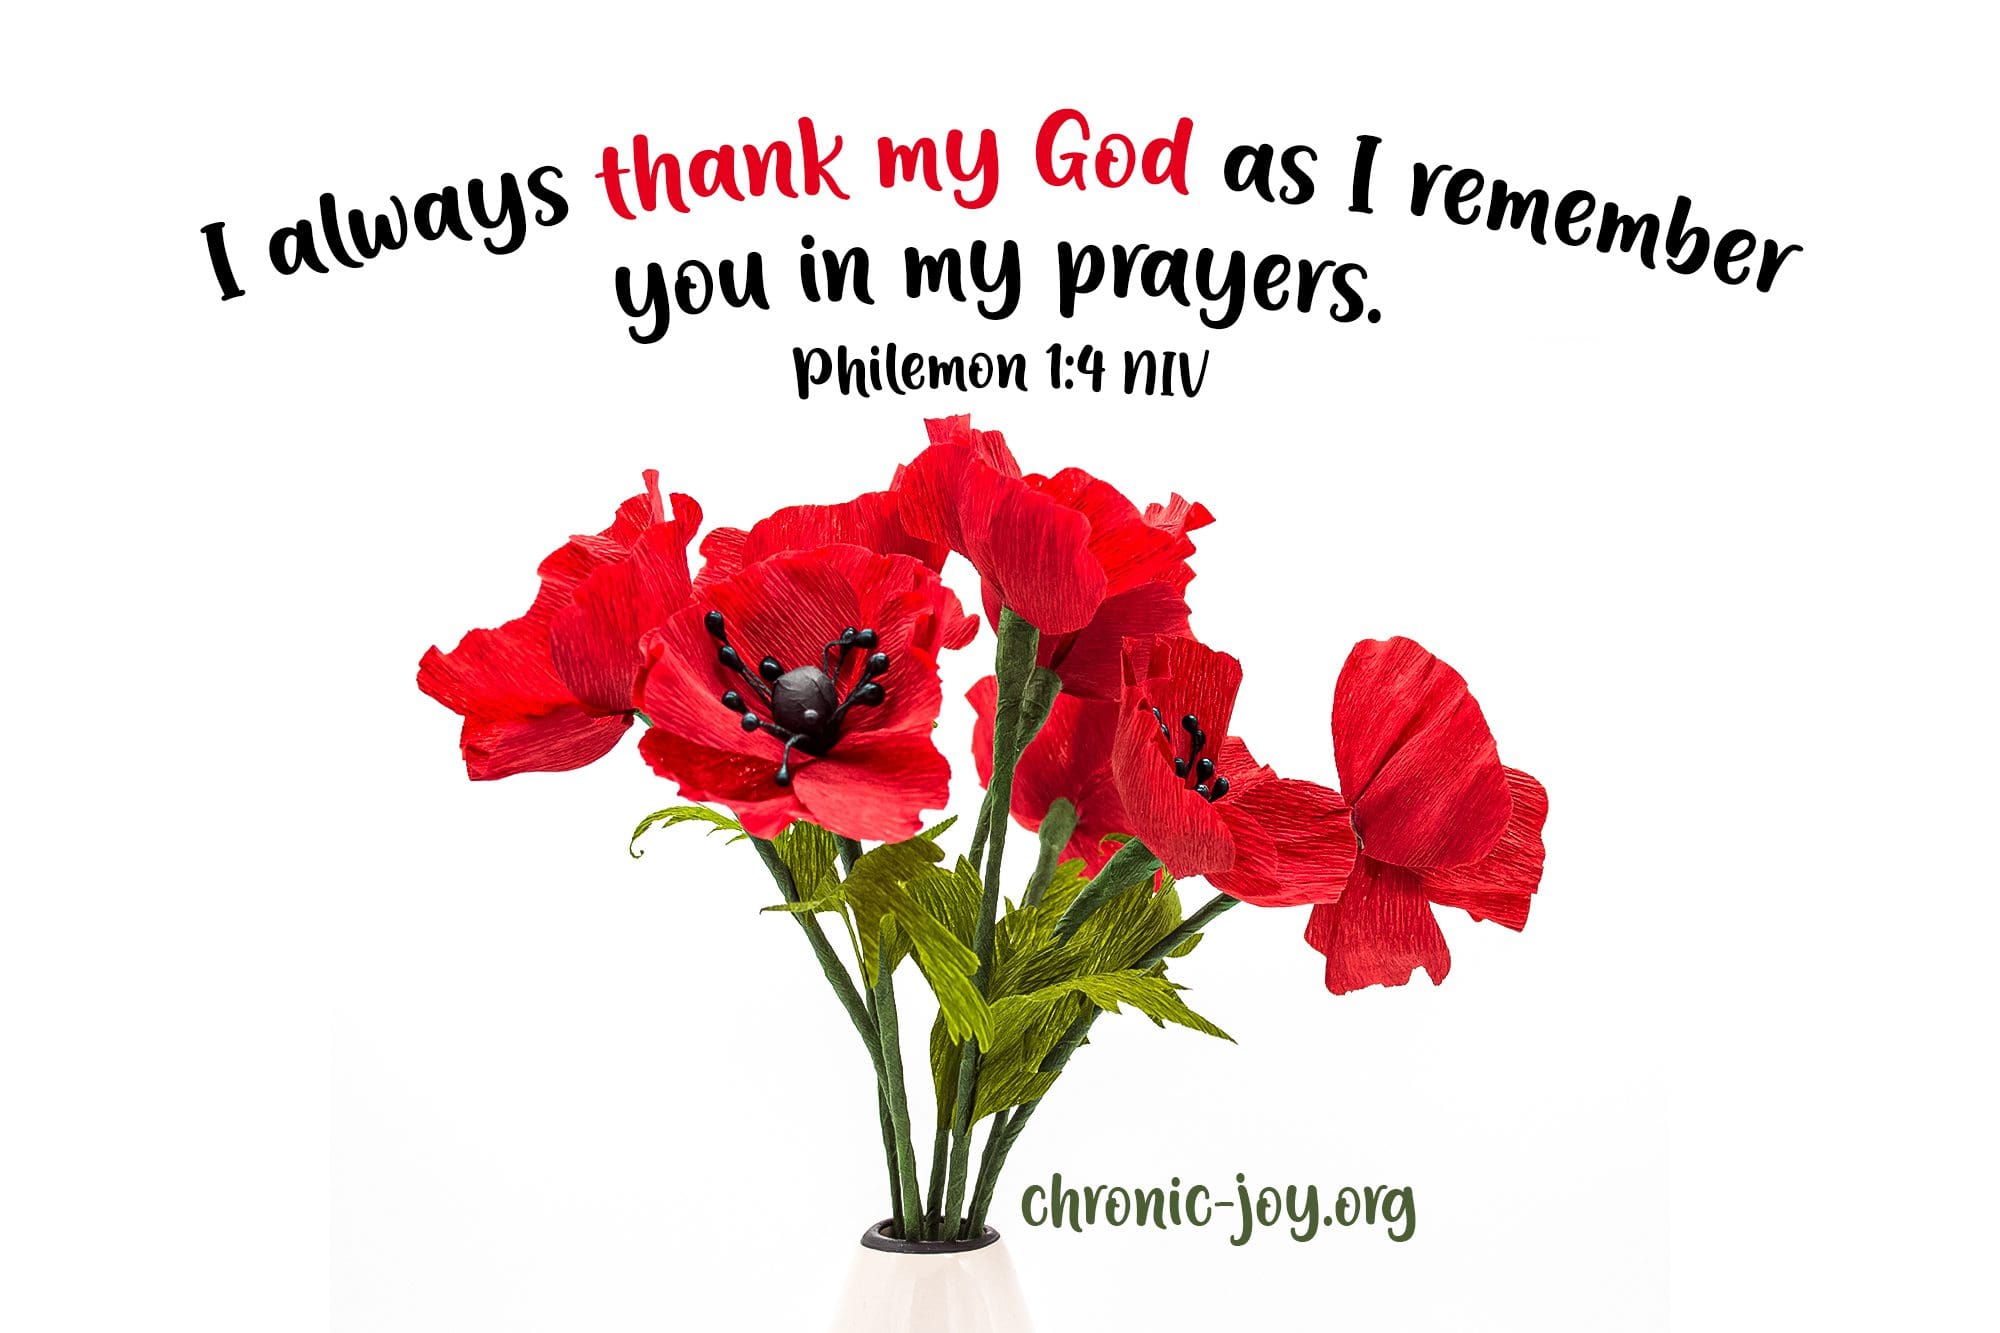 "I always thank my God as I remember you in my prayers." Philemon 1:4 NIV